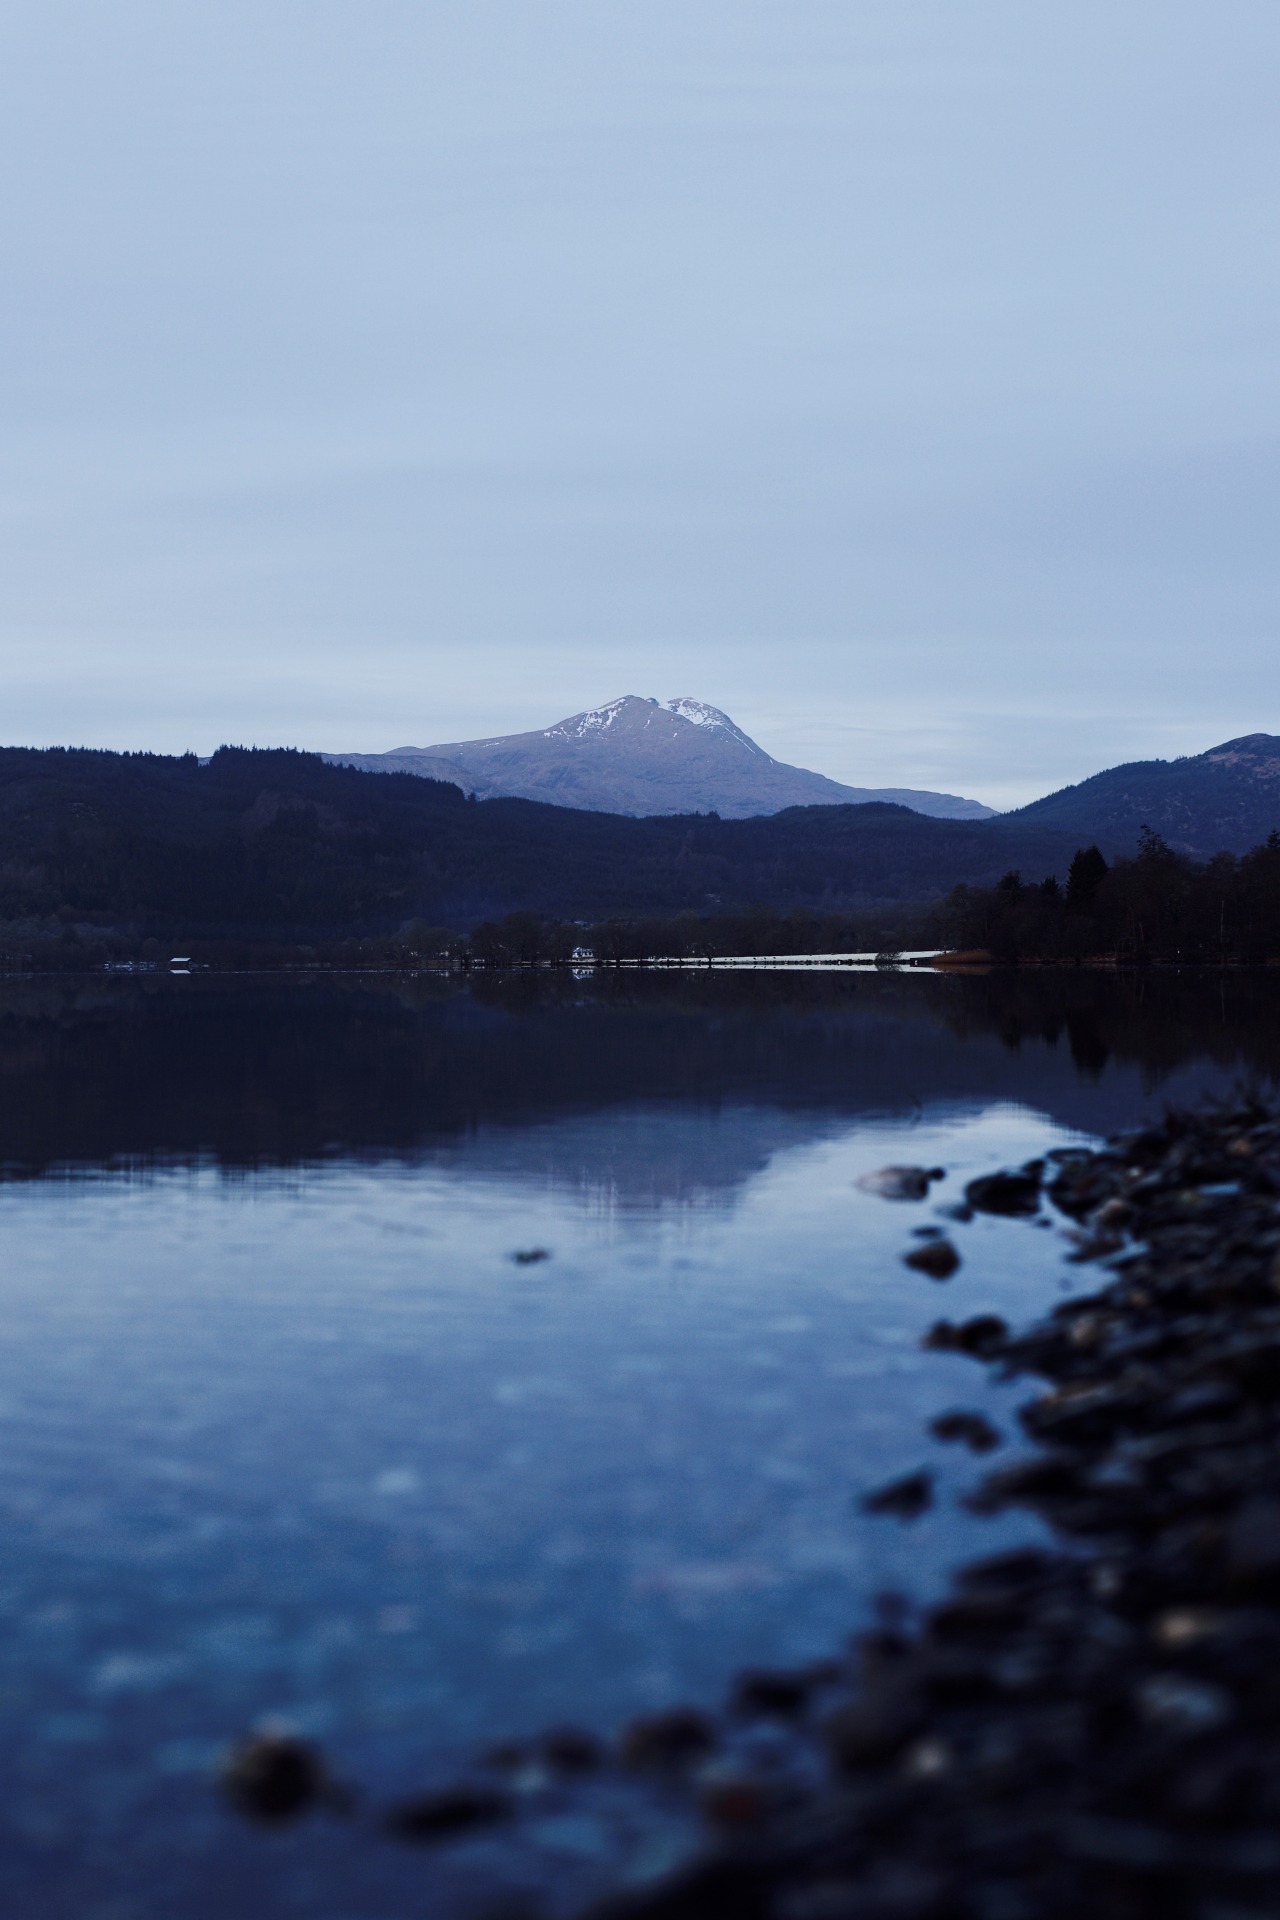 kylebonallo:
“Loch Ard by Kyle Bonallo (ig: @kylebonallo)
”